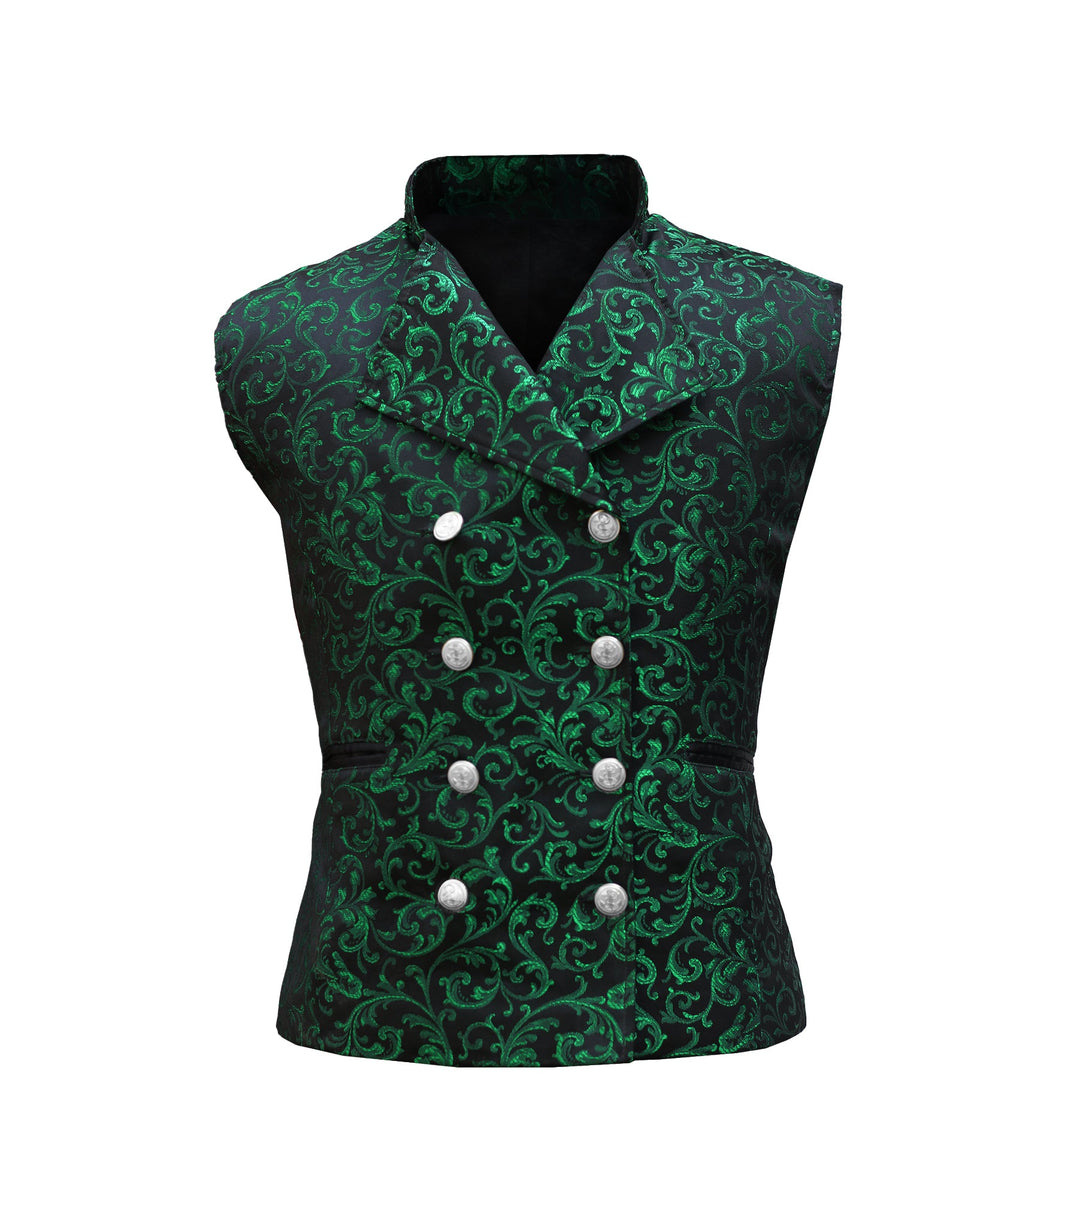 Ladies Victorian Half-Sleeve Jacket (Made to Order)